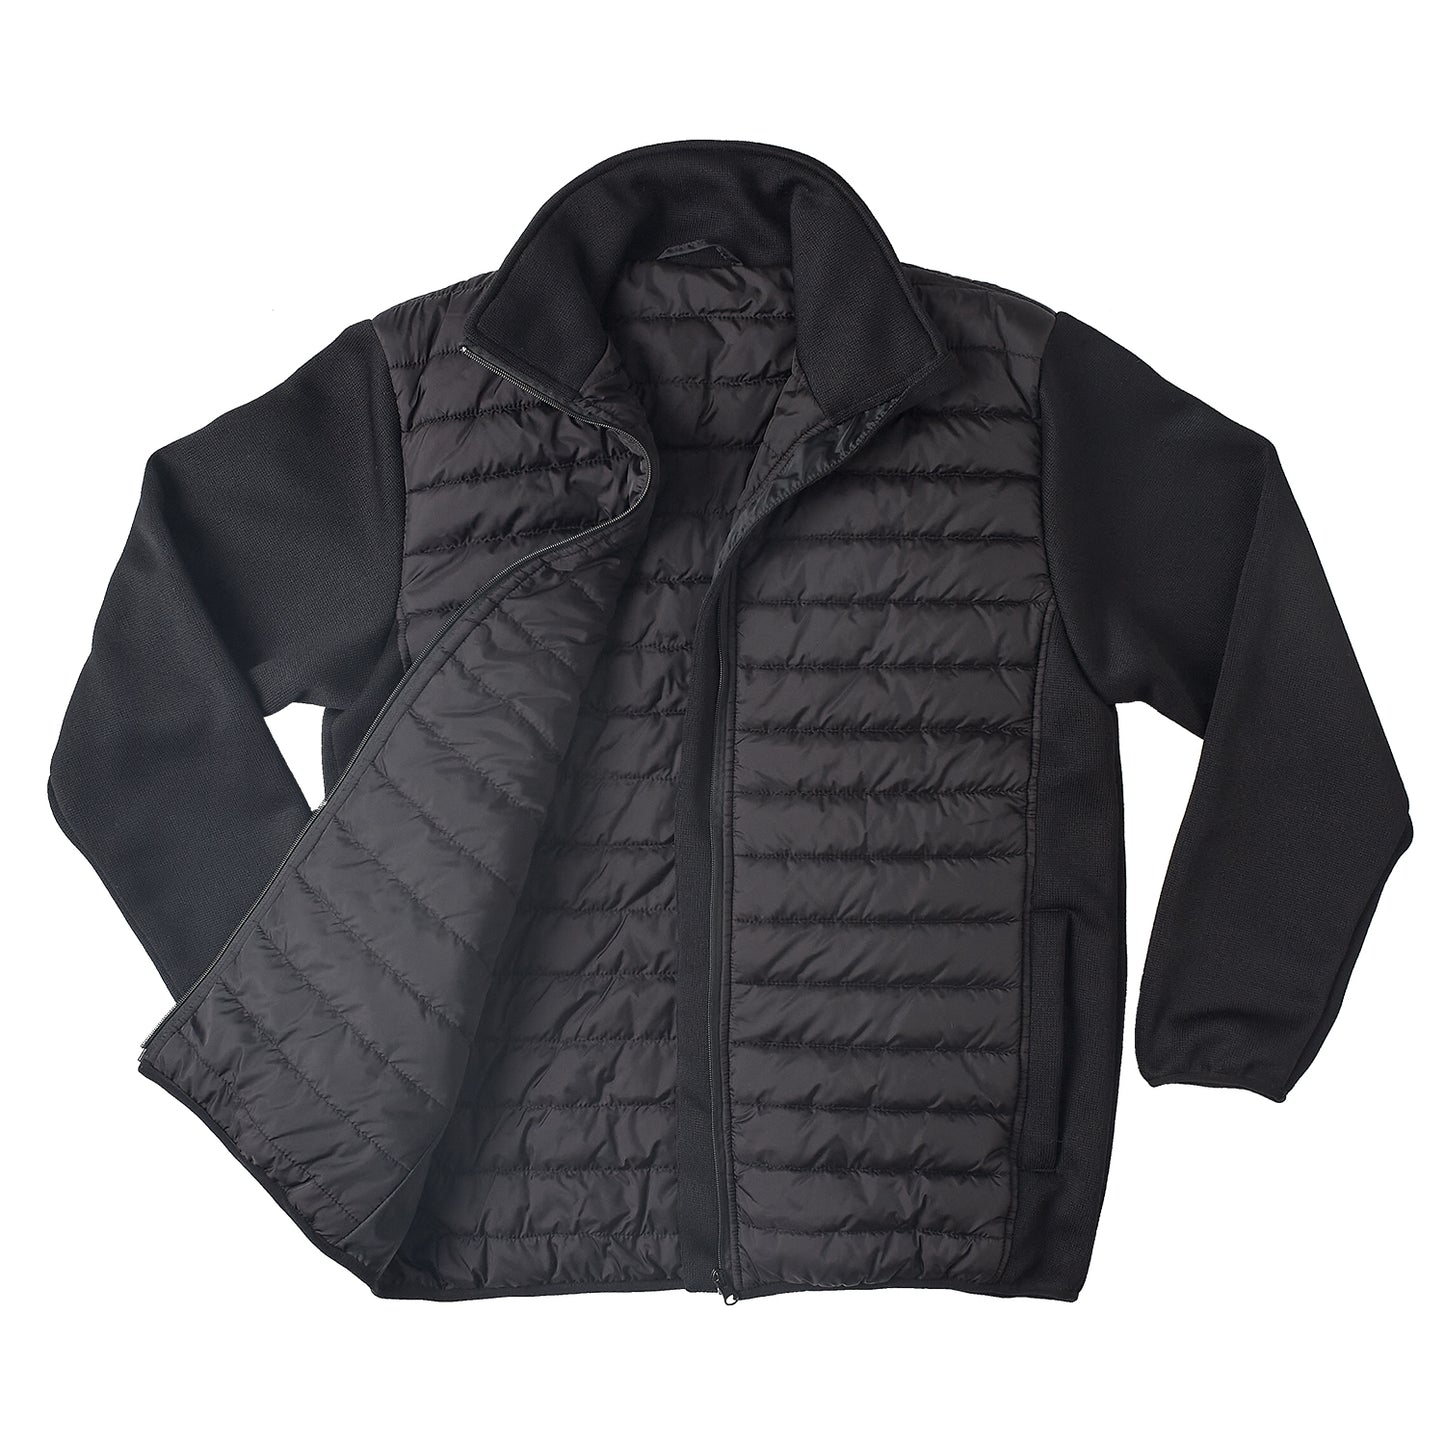 Brahma Vantage Corporate Padded Winter Jacket - Black - Open